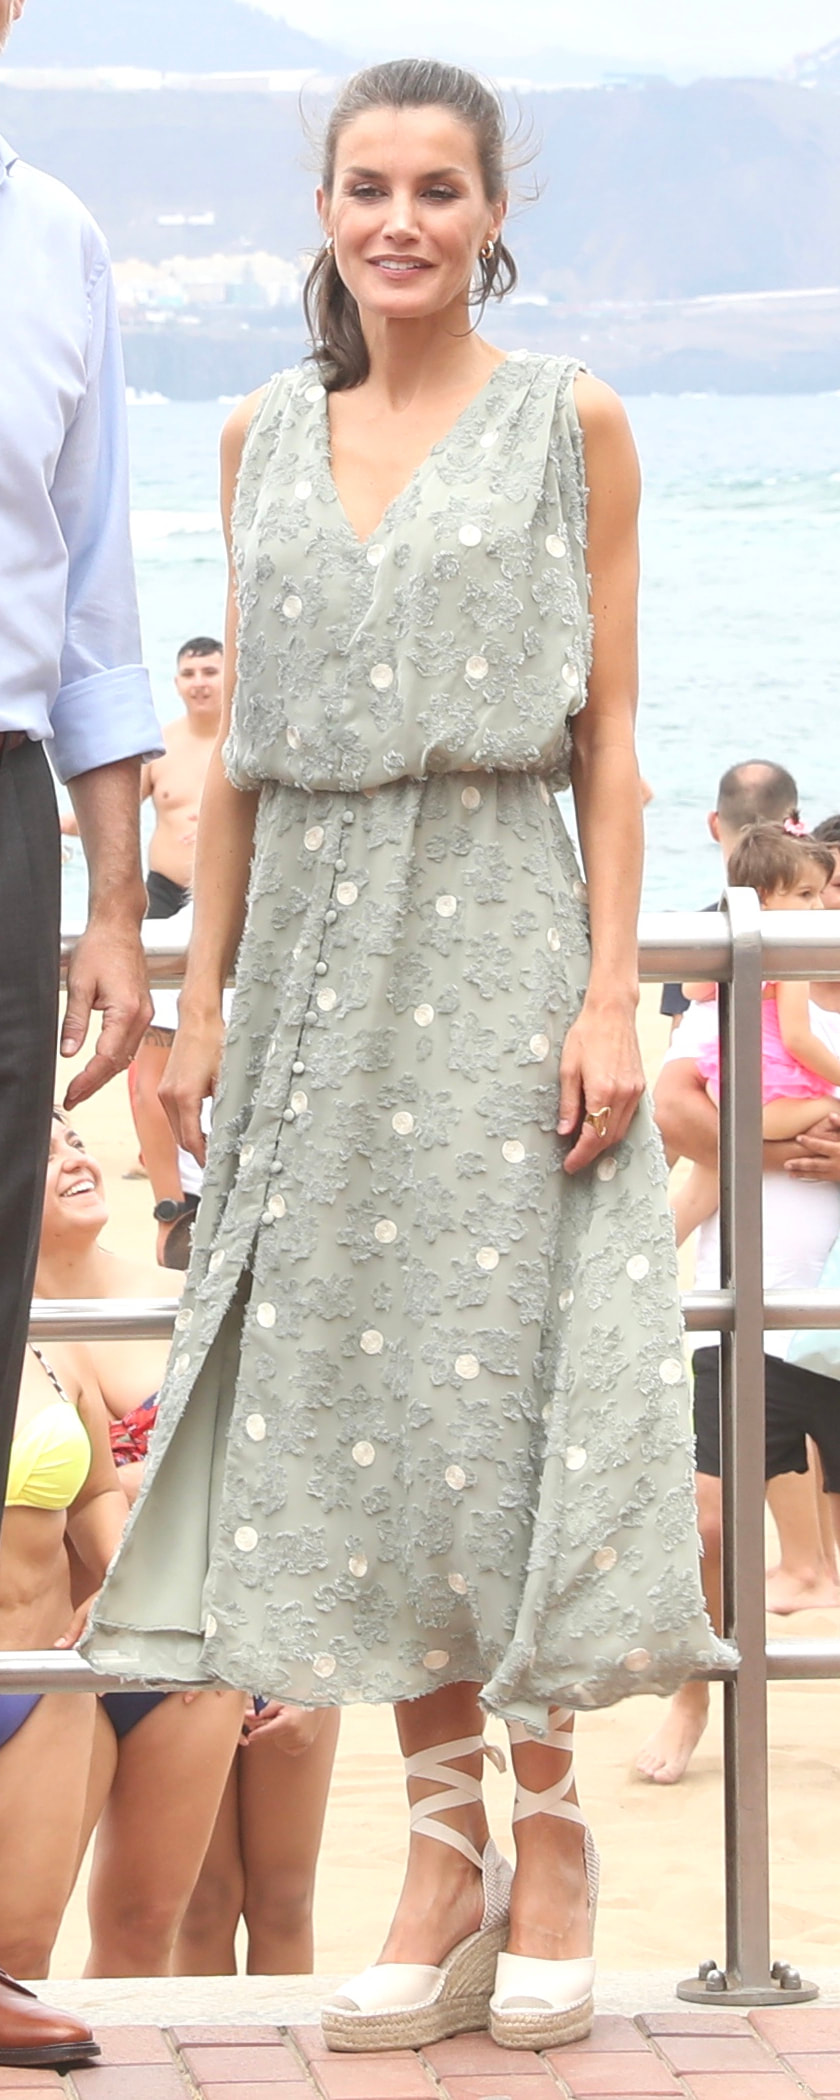 Zara Combined Structured Midi Dress​ as seen on Queen Letizia.